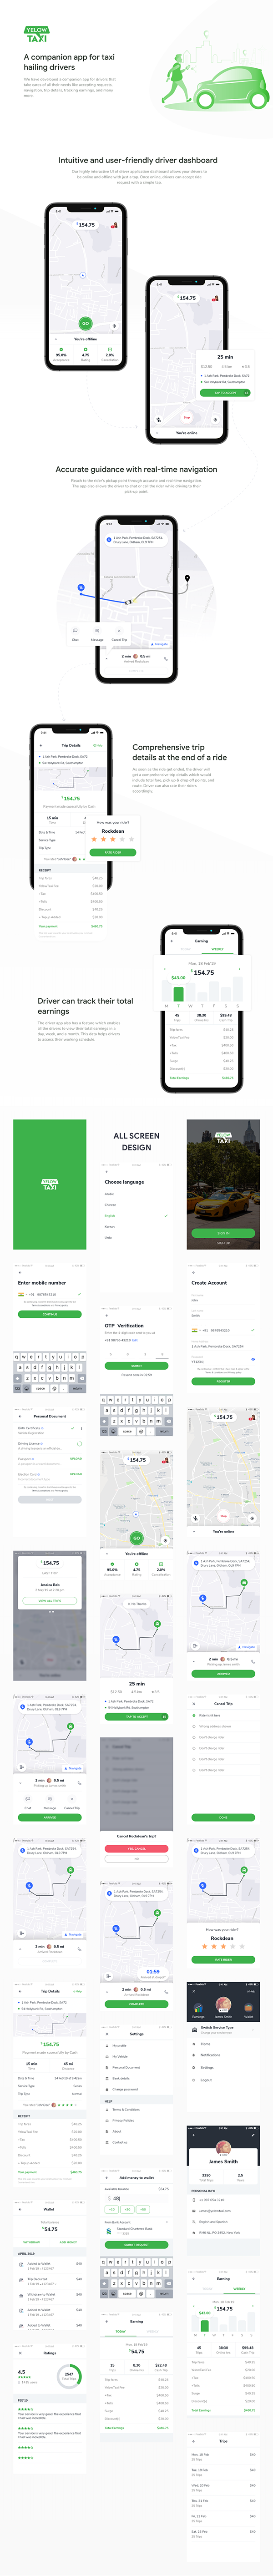 Uber like Taxi Hailing Driver App UI